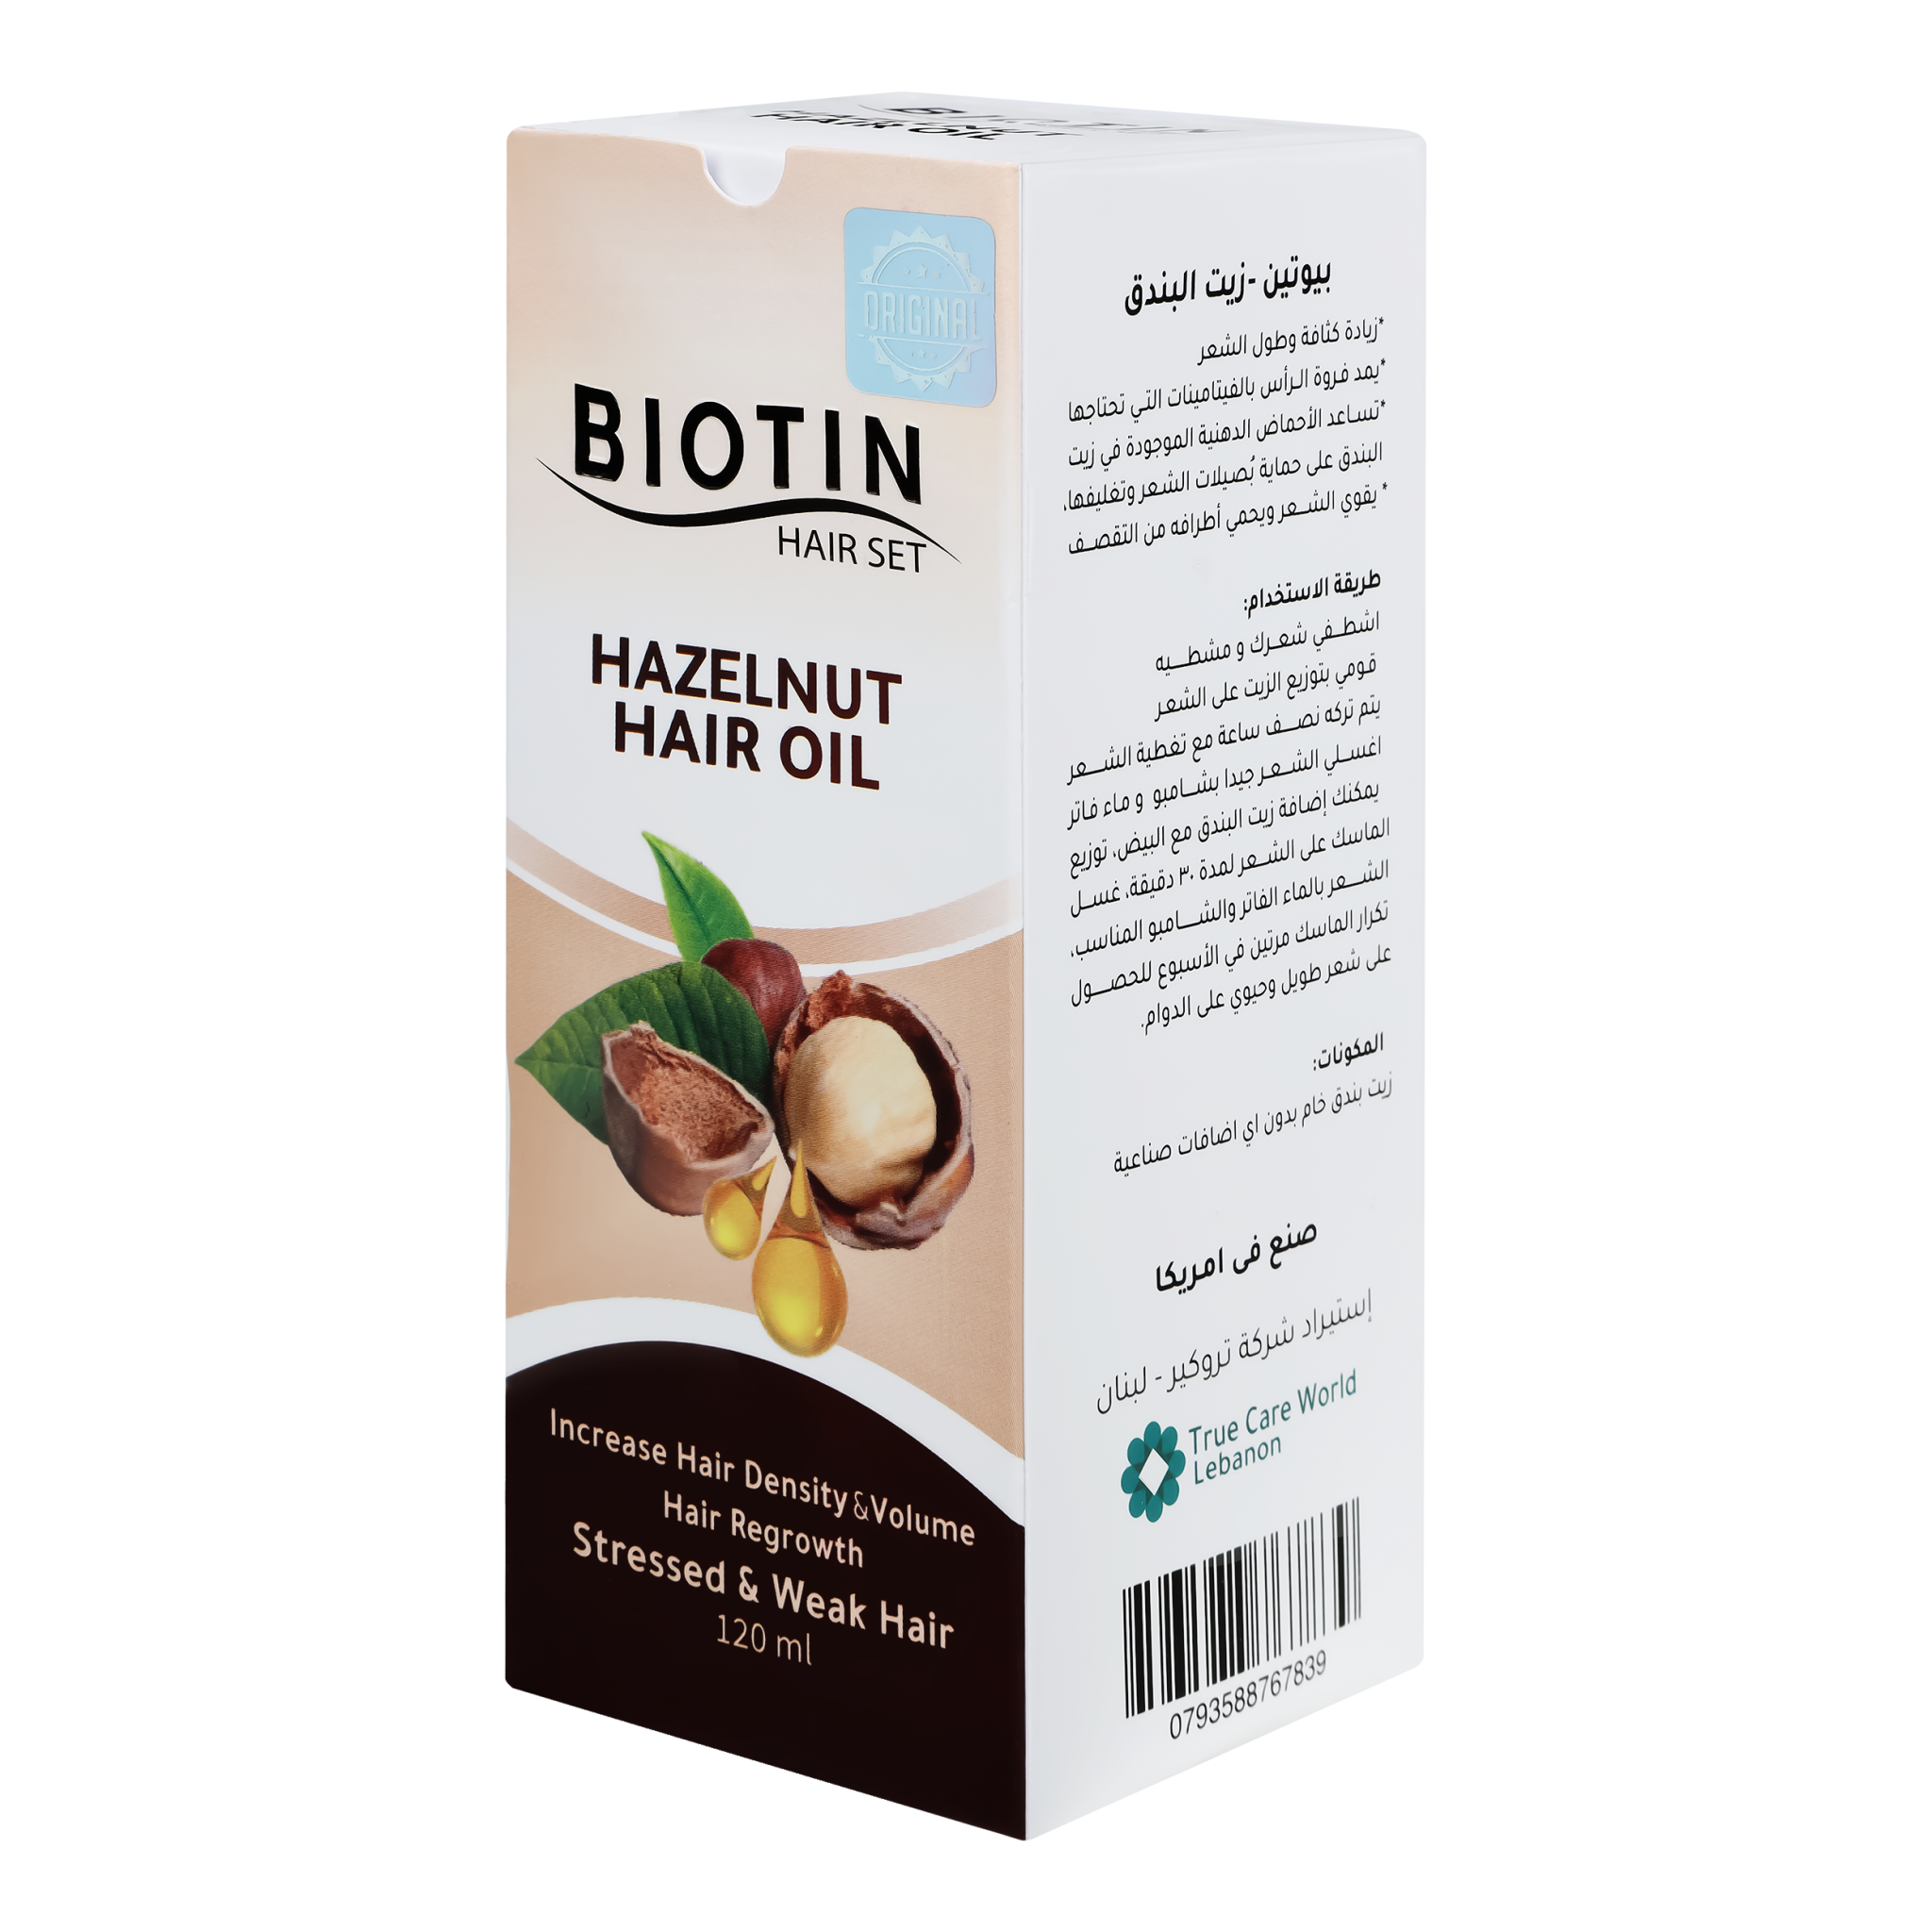 Biotin Hair Set, Hazelnut hair oil, Increase hair density & volume hair  regrowth,120ml | True Care World